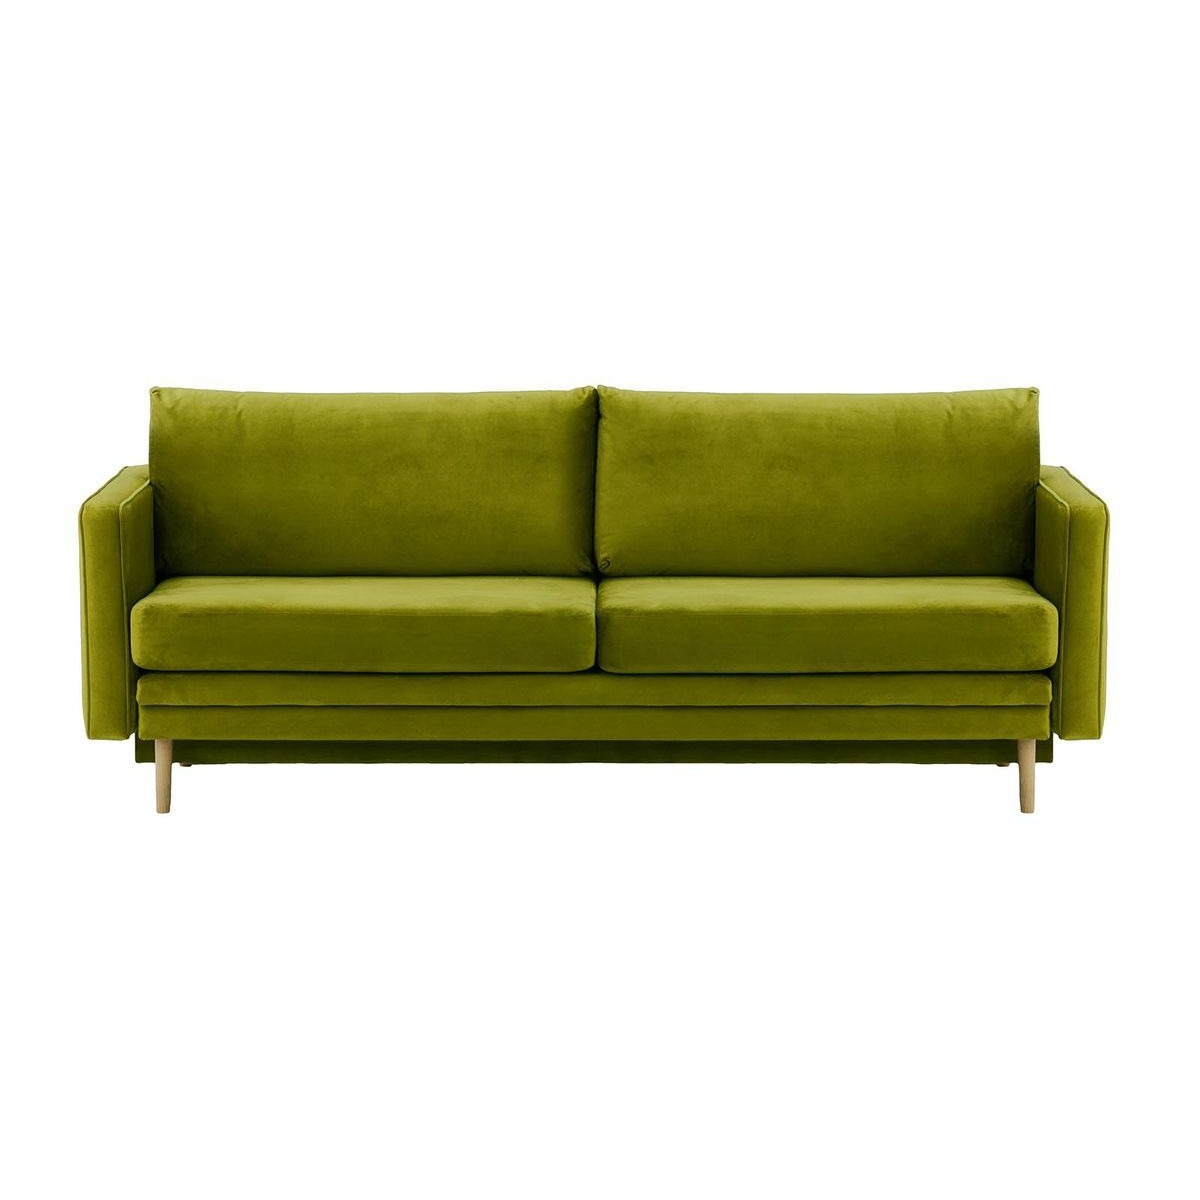 Lioni Sofa Bed with Storage, olive green, Leg colour: wax black - image 1